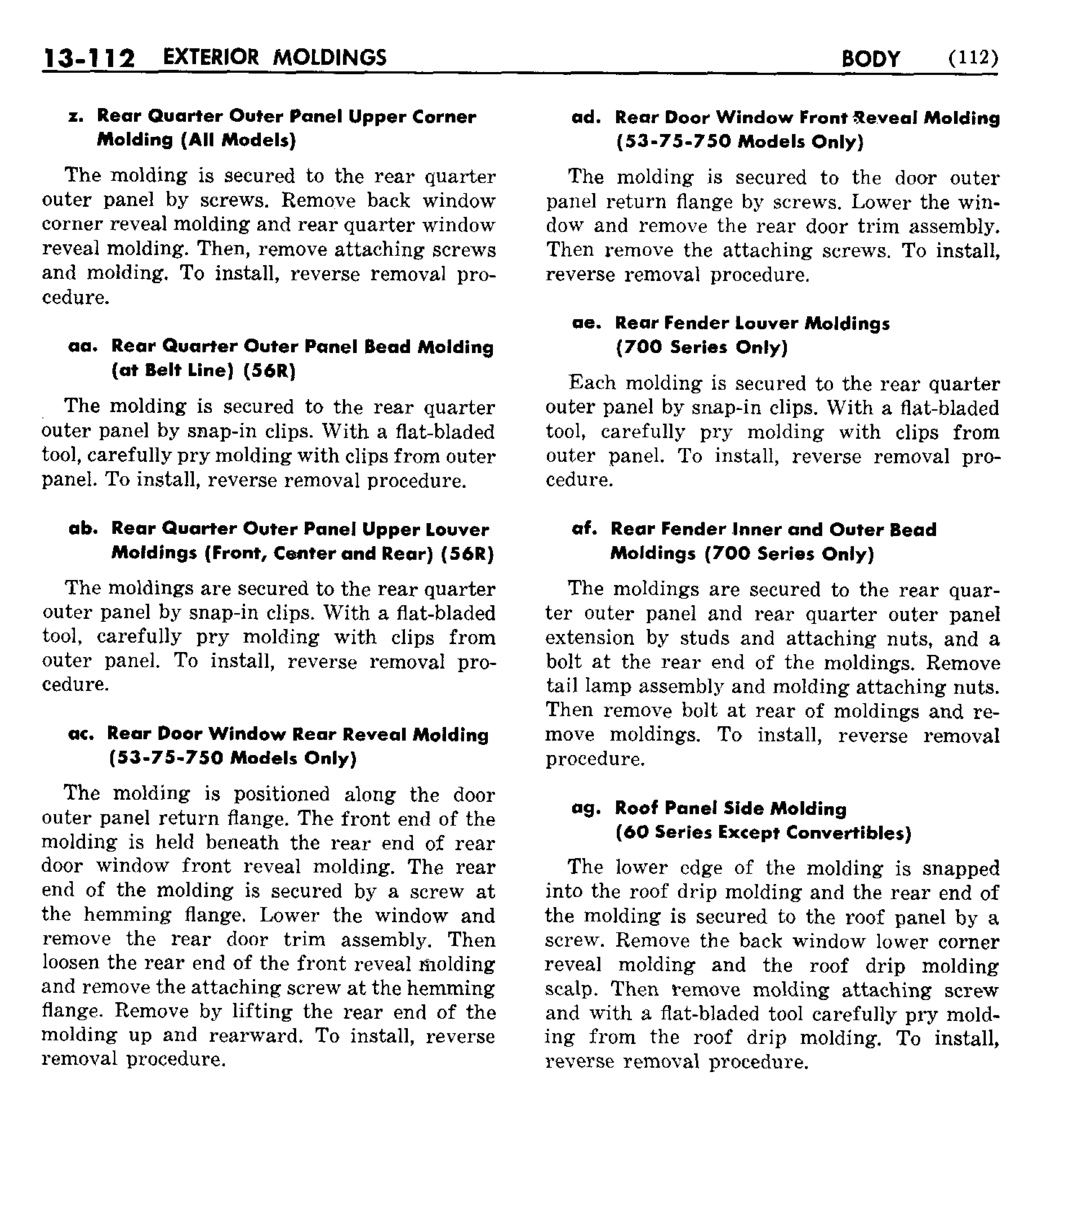 n_1958 Buick Body Service Manual-113-113.jpg